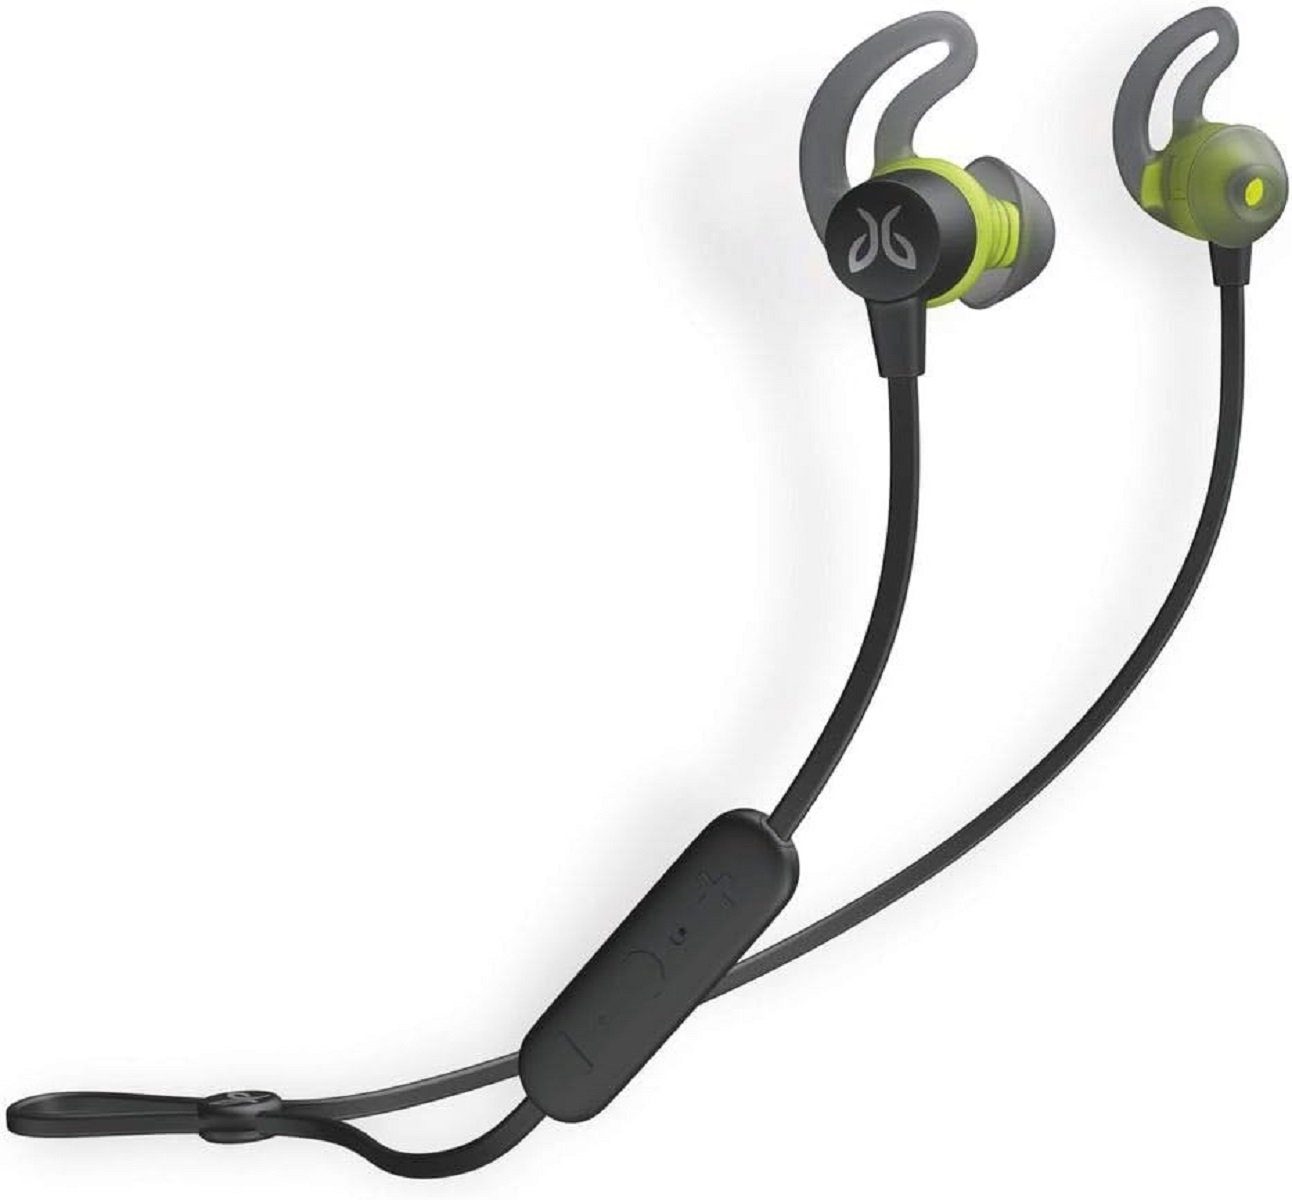 Tarah Kopfhörer, In-Ear Sport-Kopfhörer Jaybird Wireless Schweißbeständig Bluetooth,